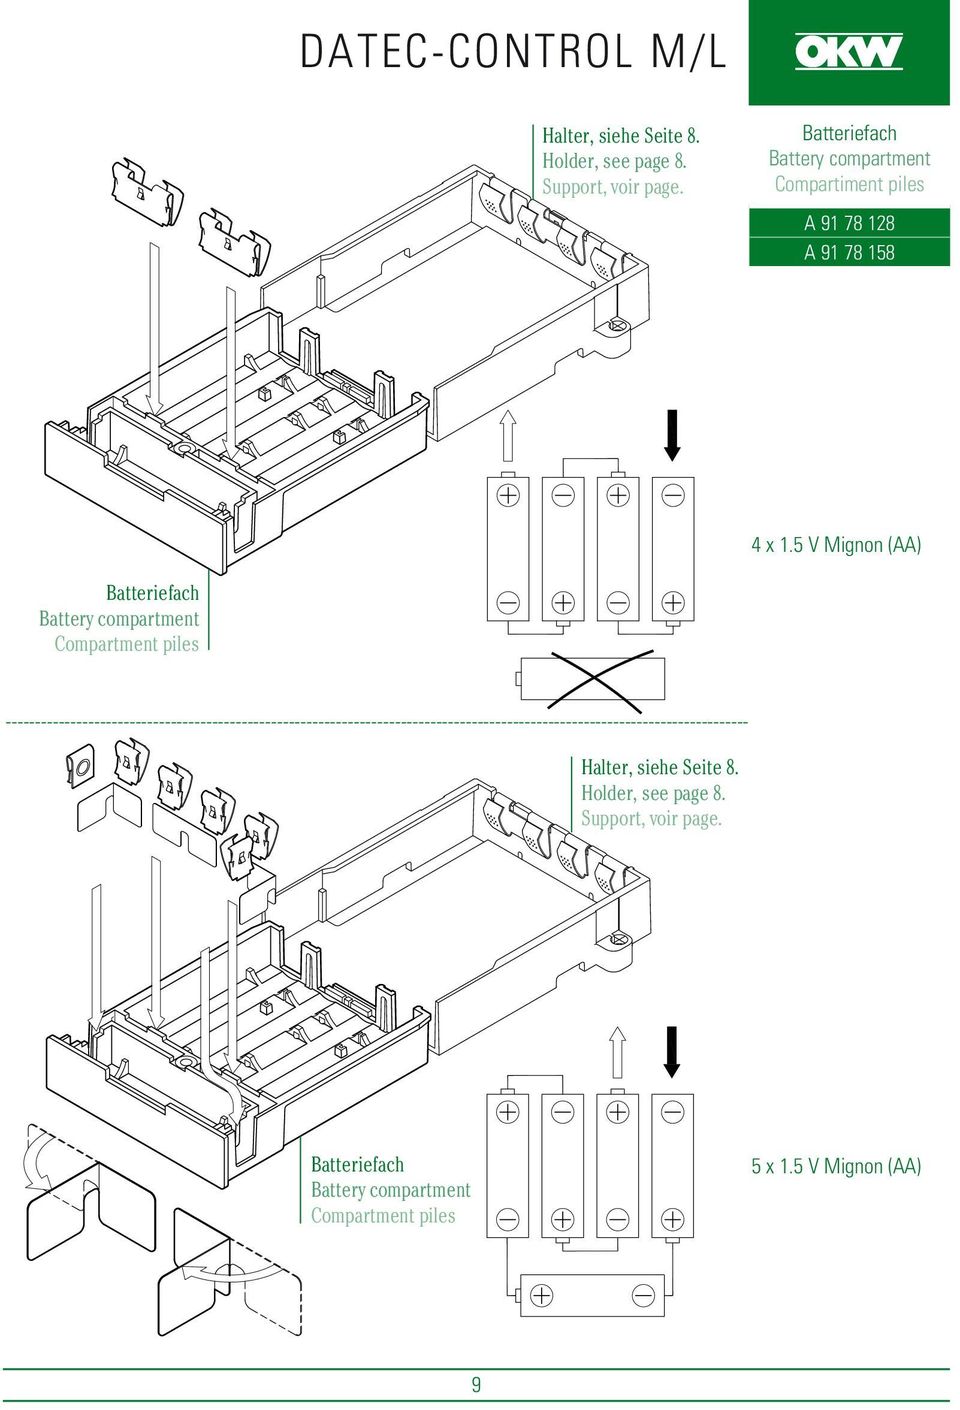 5 V Mignon (AA) Batteriefach Battery compartment Compartment piles